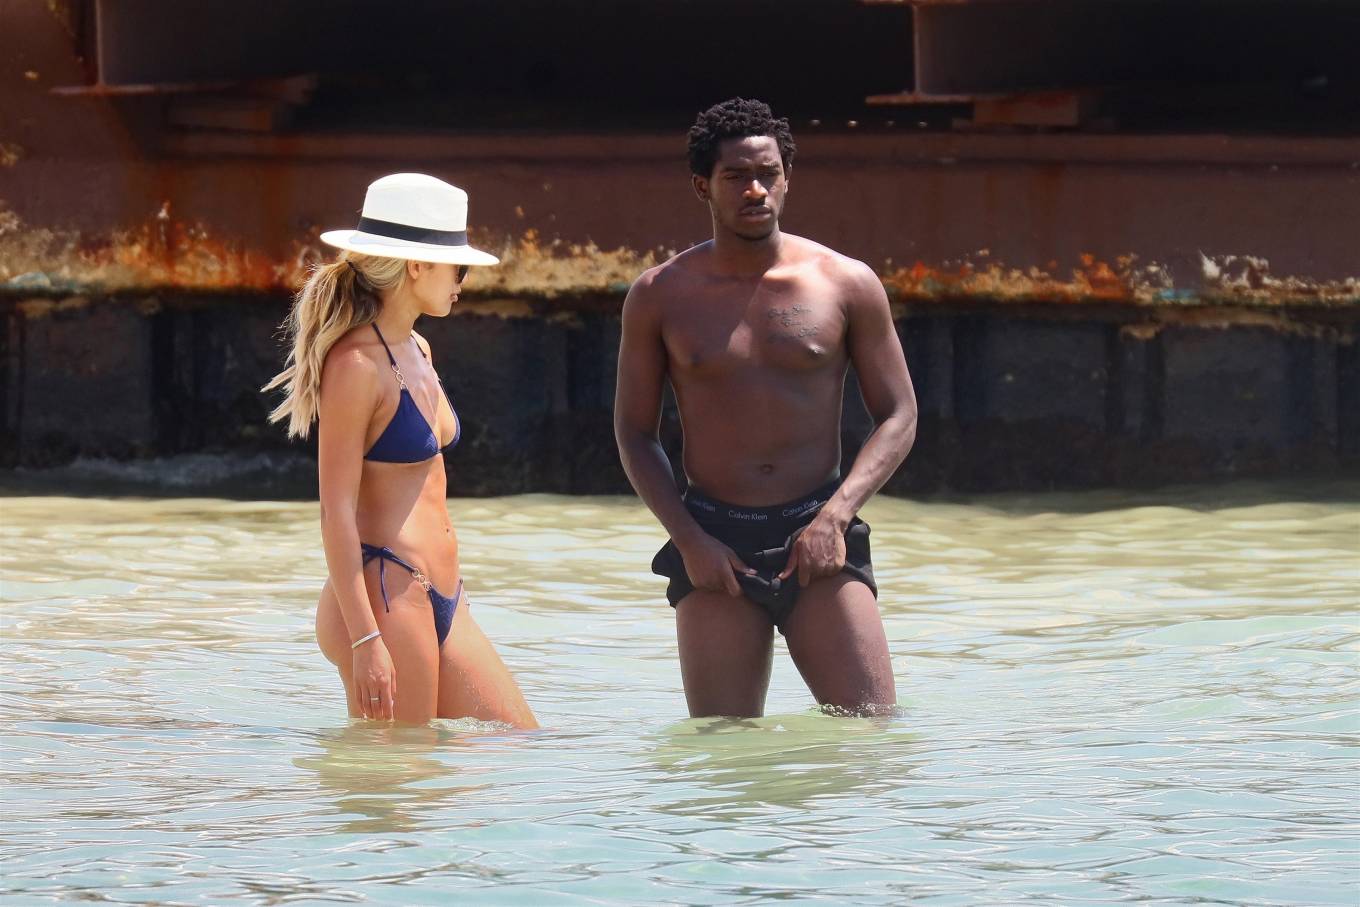 Montana Brown – In a bikini on the beach in Cannes